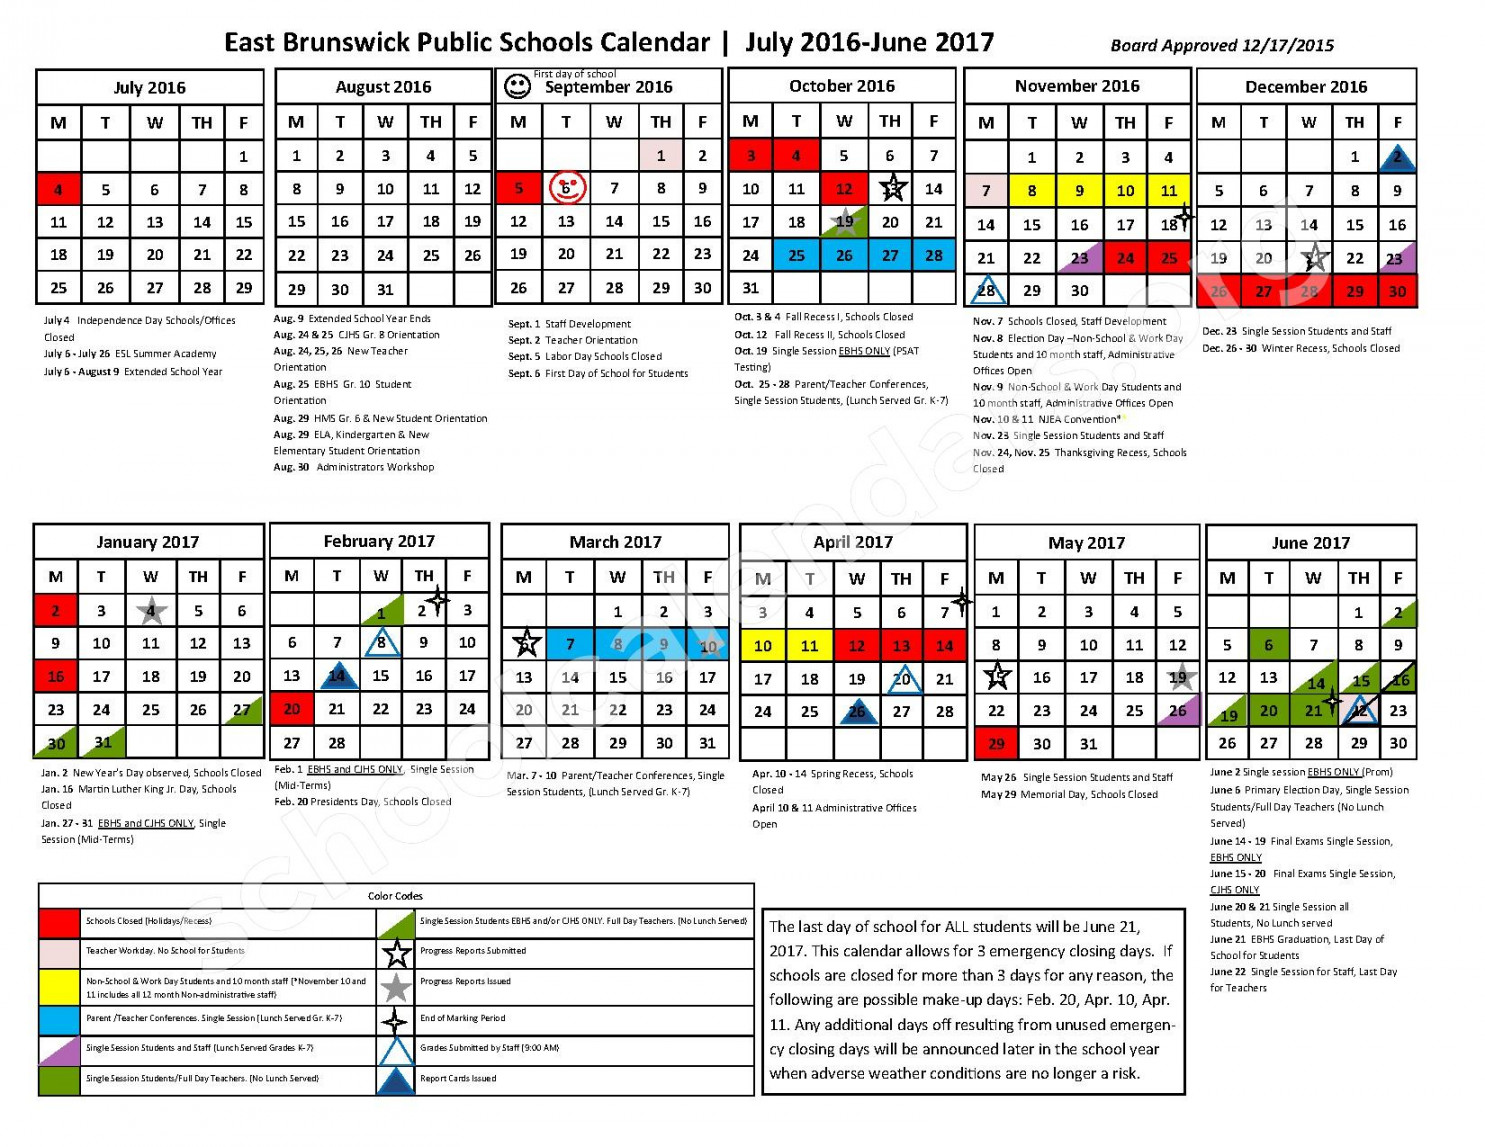 East Brunswick Public Schools Calendars – East Brunswick, NJ